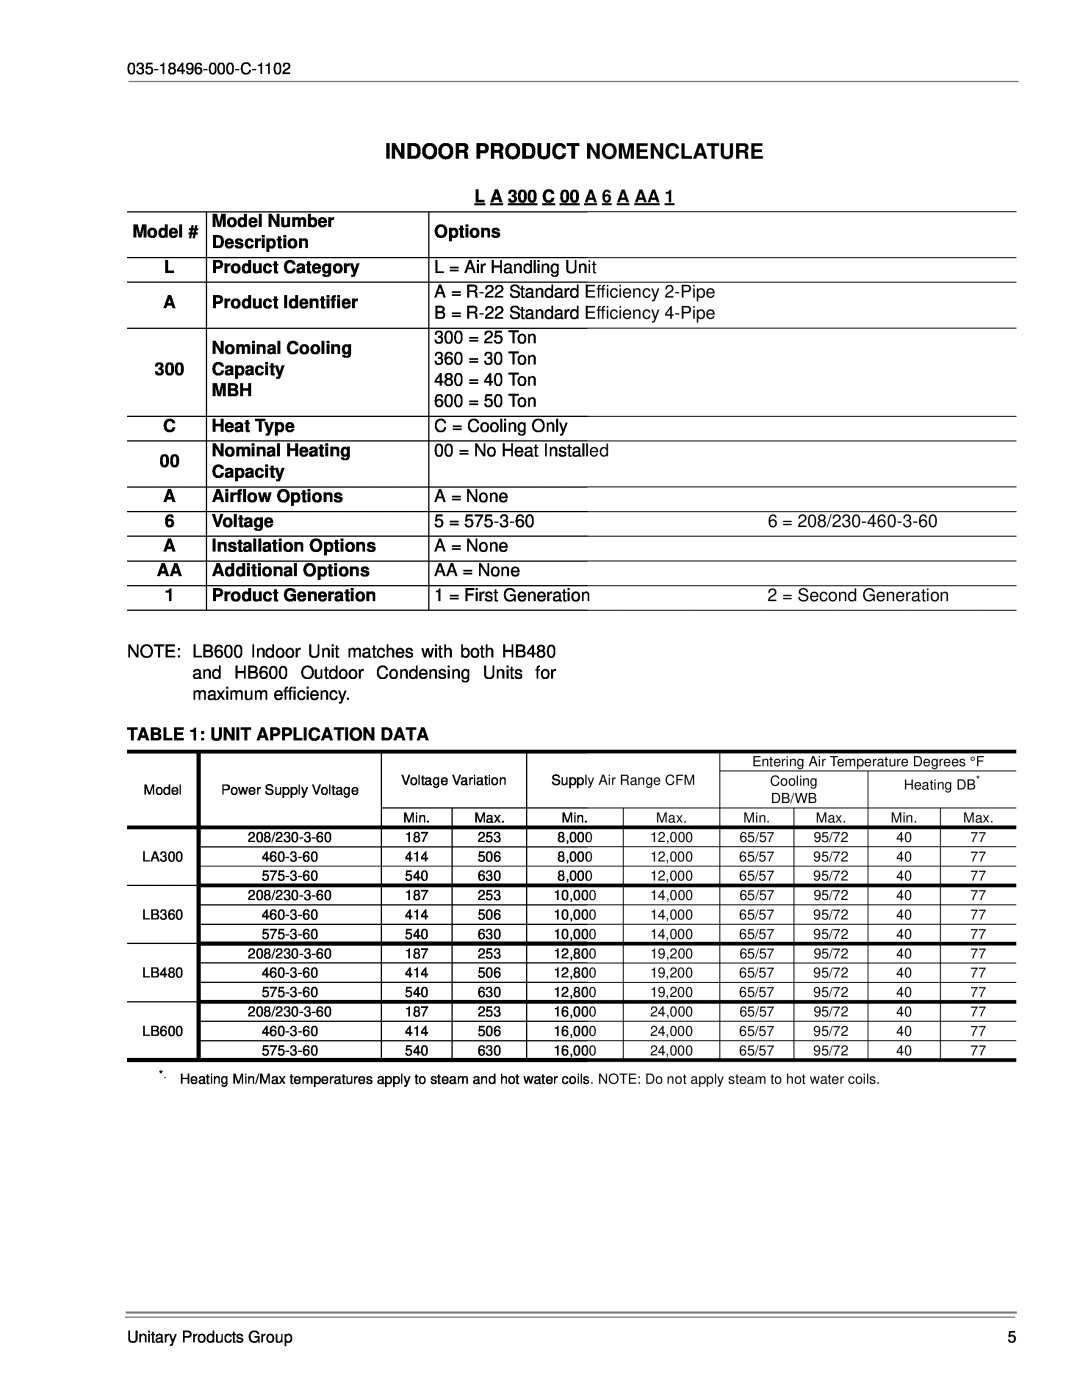 Energy Tech Laboratories LB360 Indoor Product Nomenclature, L A 300 C 00 A 6 A AA, Model #, Model Number, Options, Voltage 